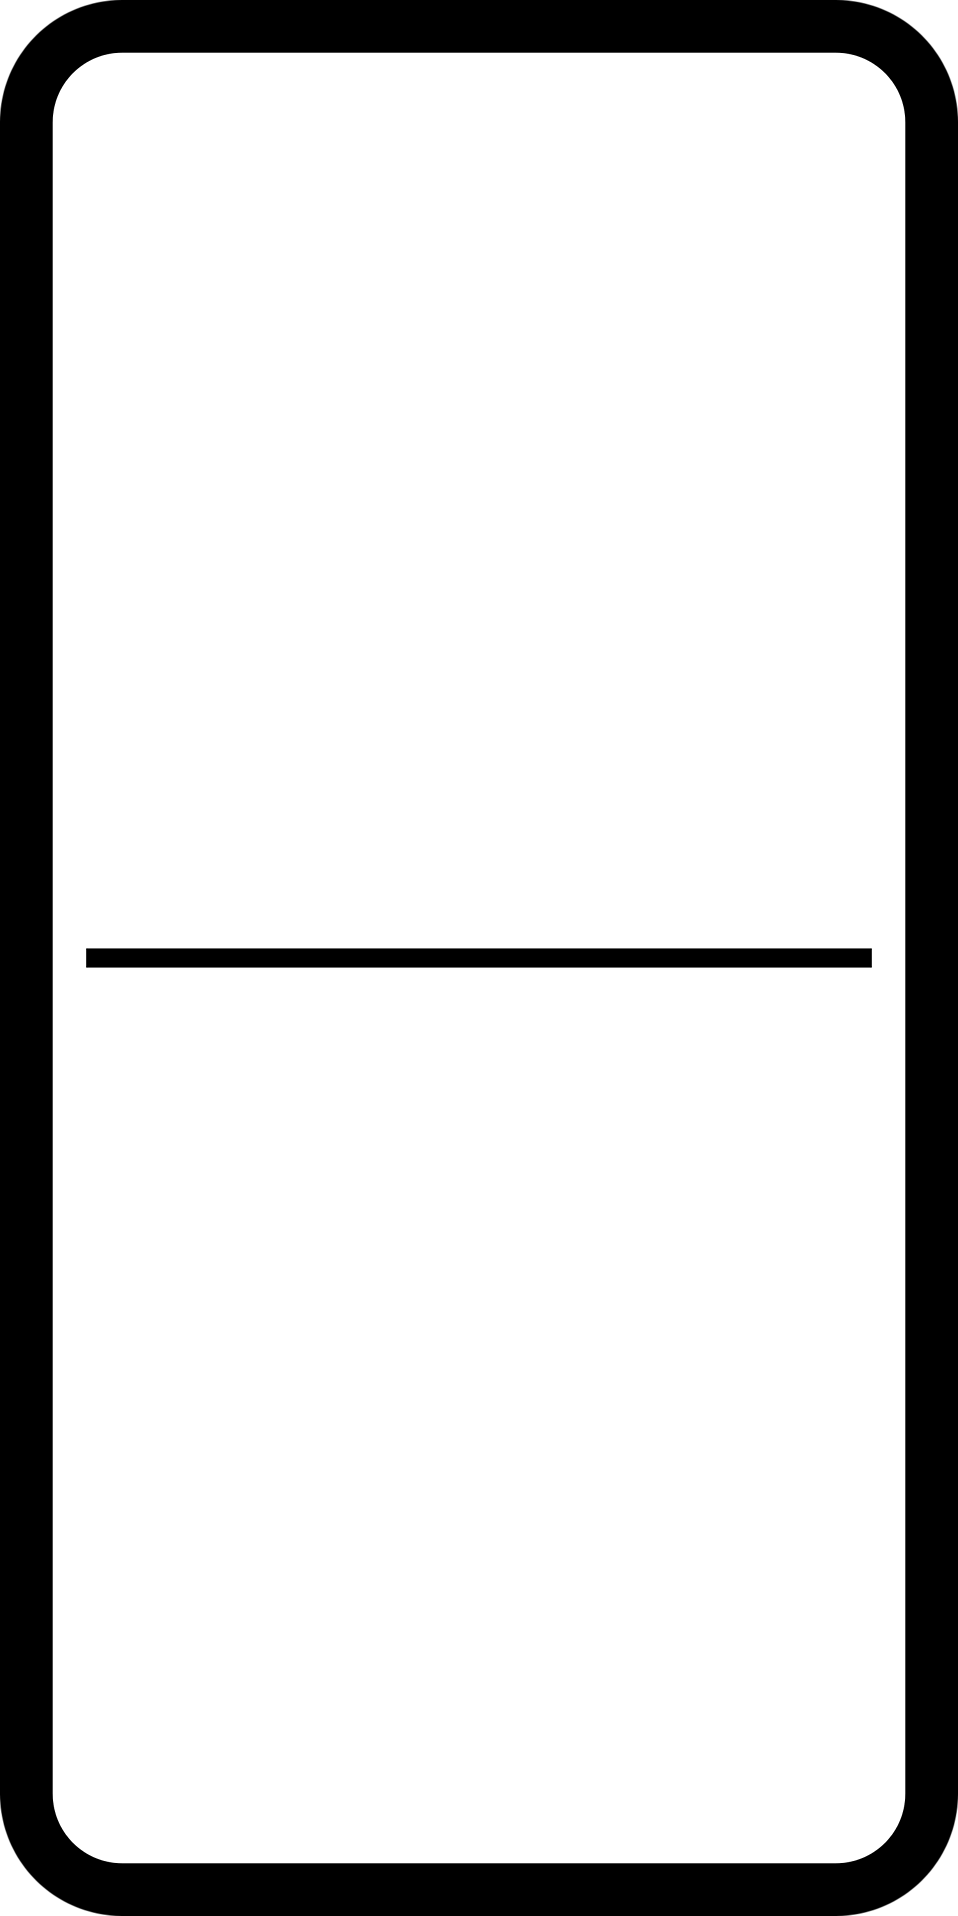 Illustration Of A Blank Domino Tile Free Stock Photo Juegos De